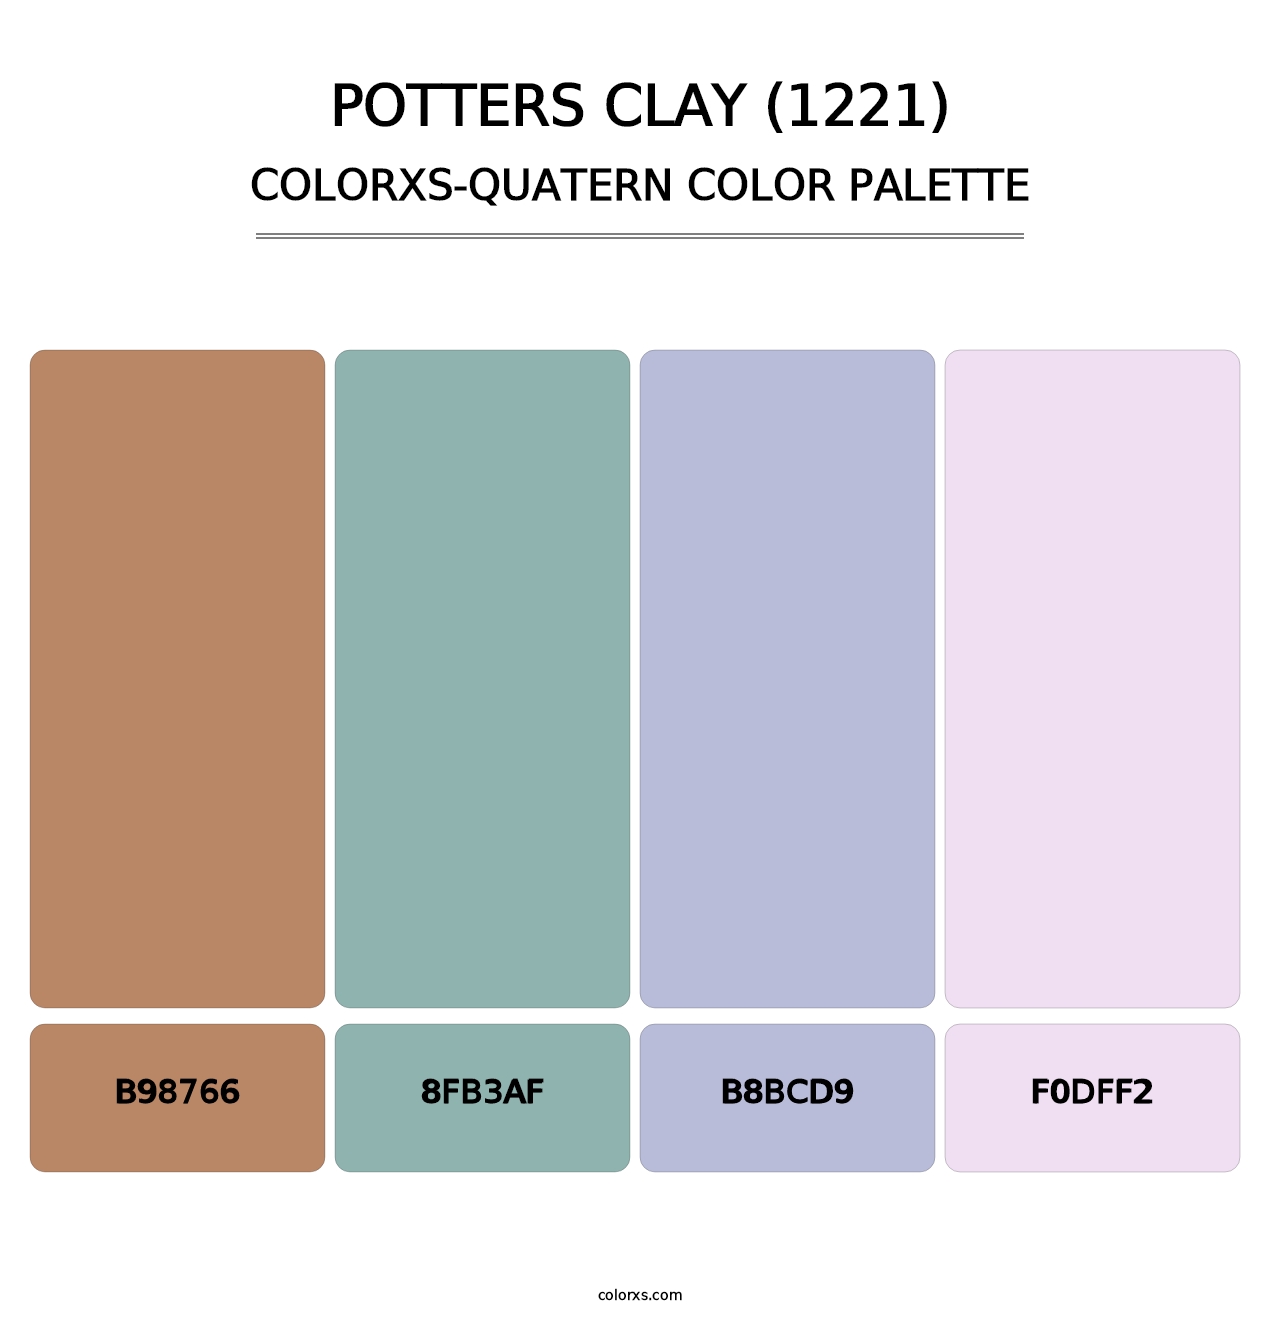 Potters Clay (1221) - Colorxs Quatern Palette